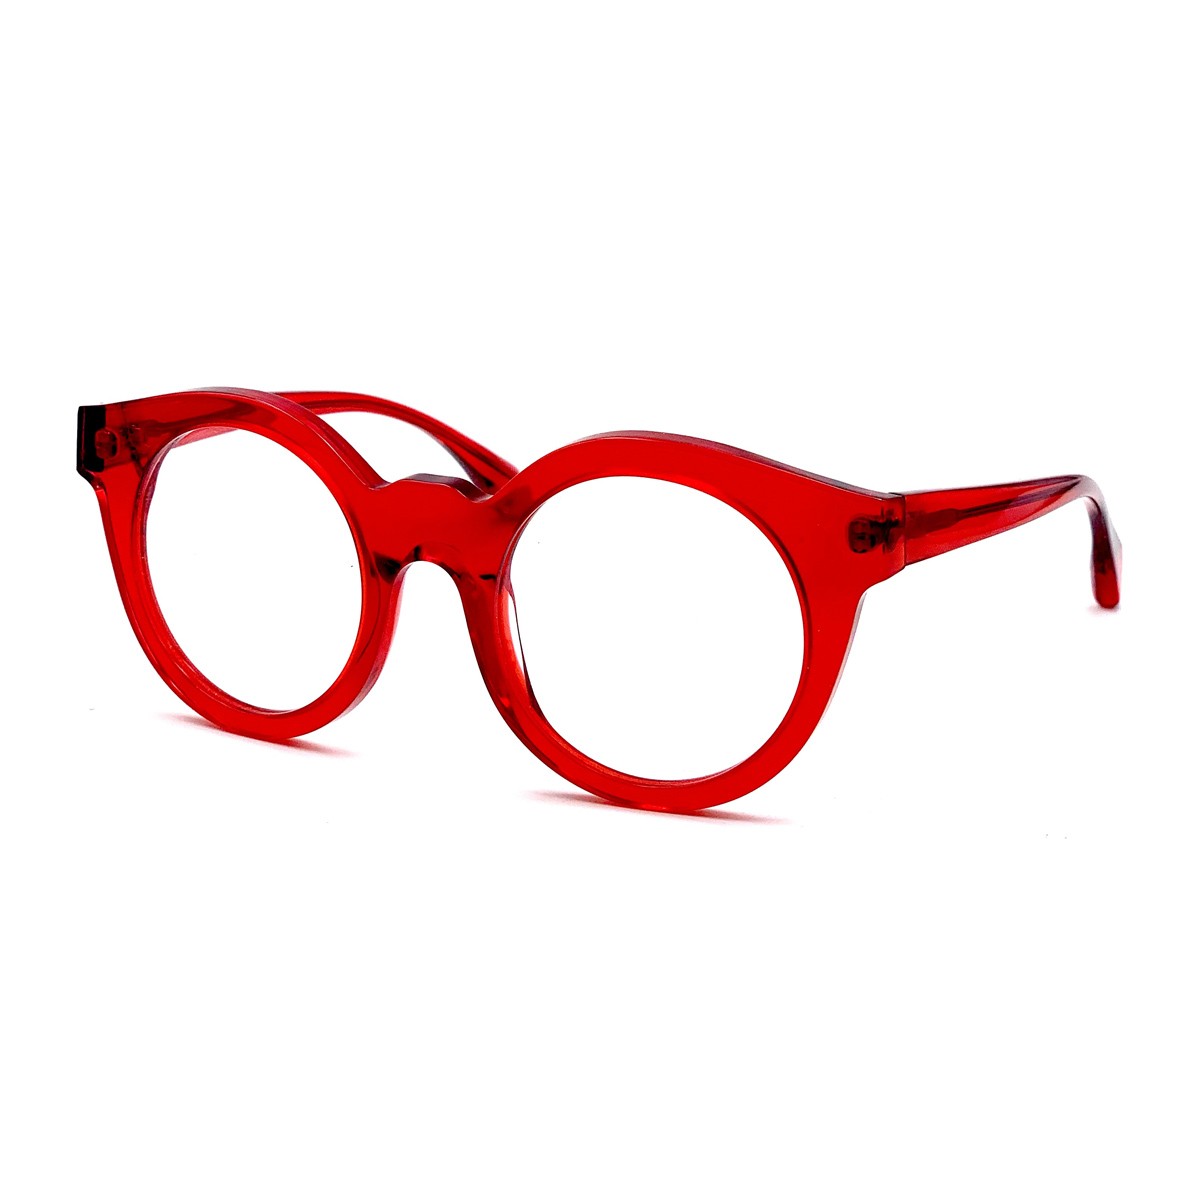 AIX M-219 | Women's eyeglasses